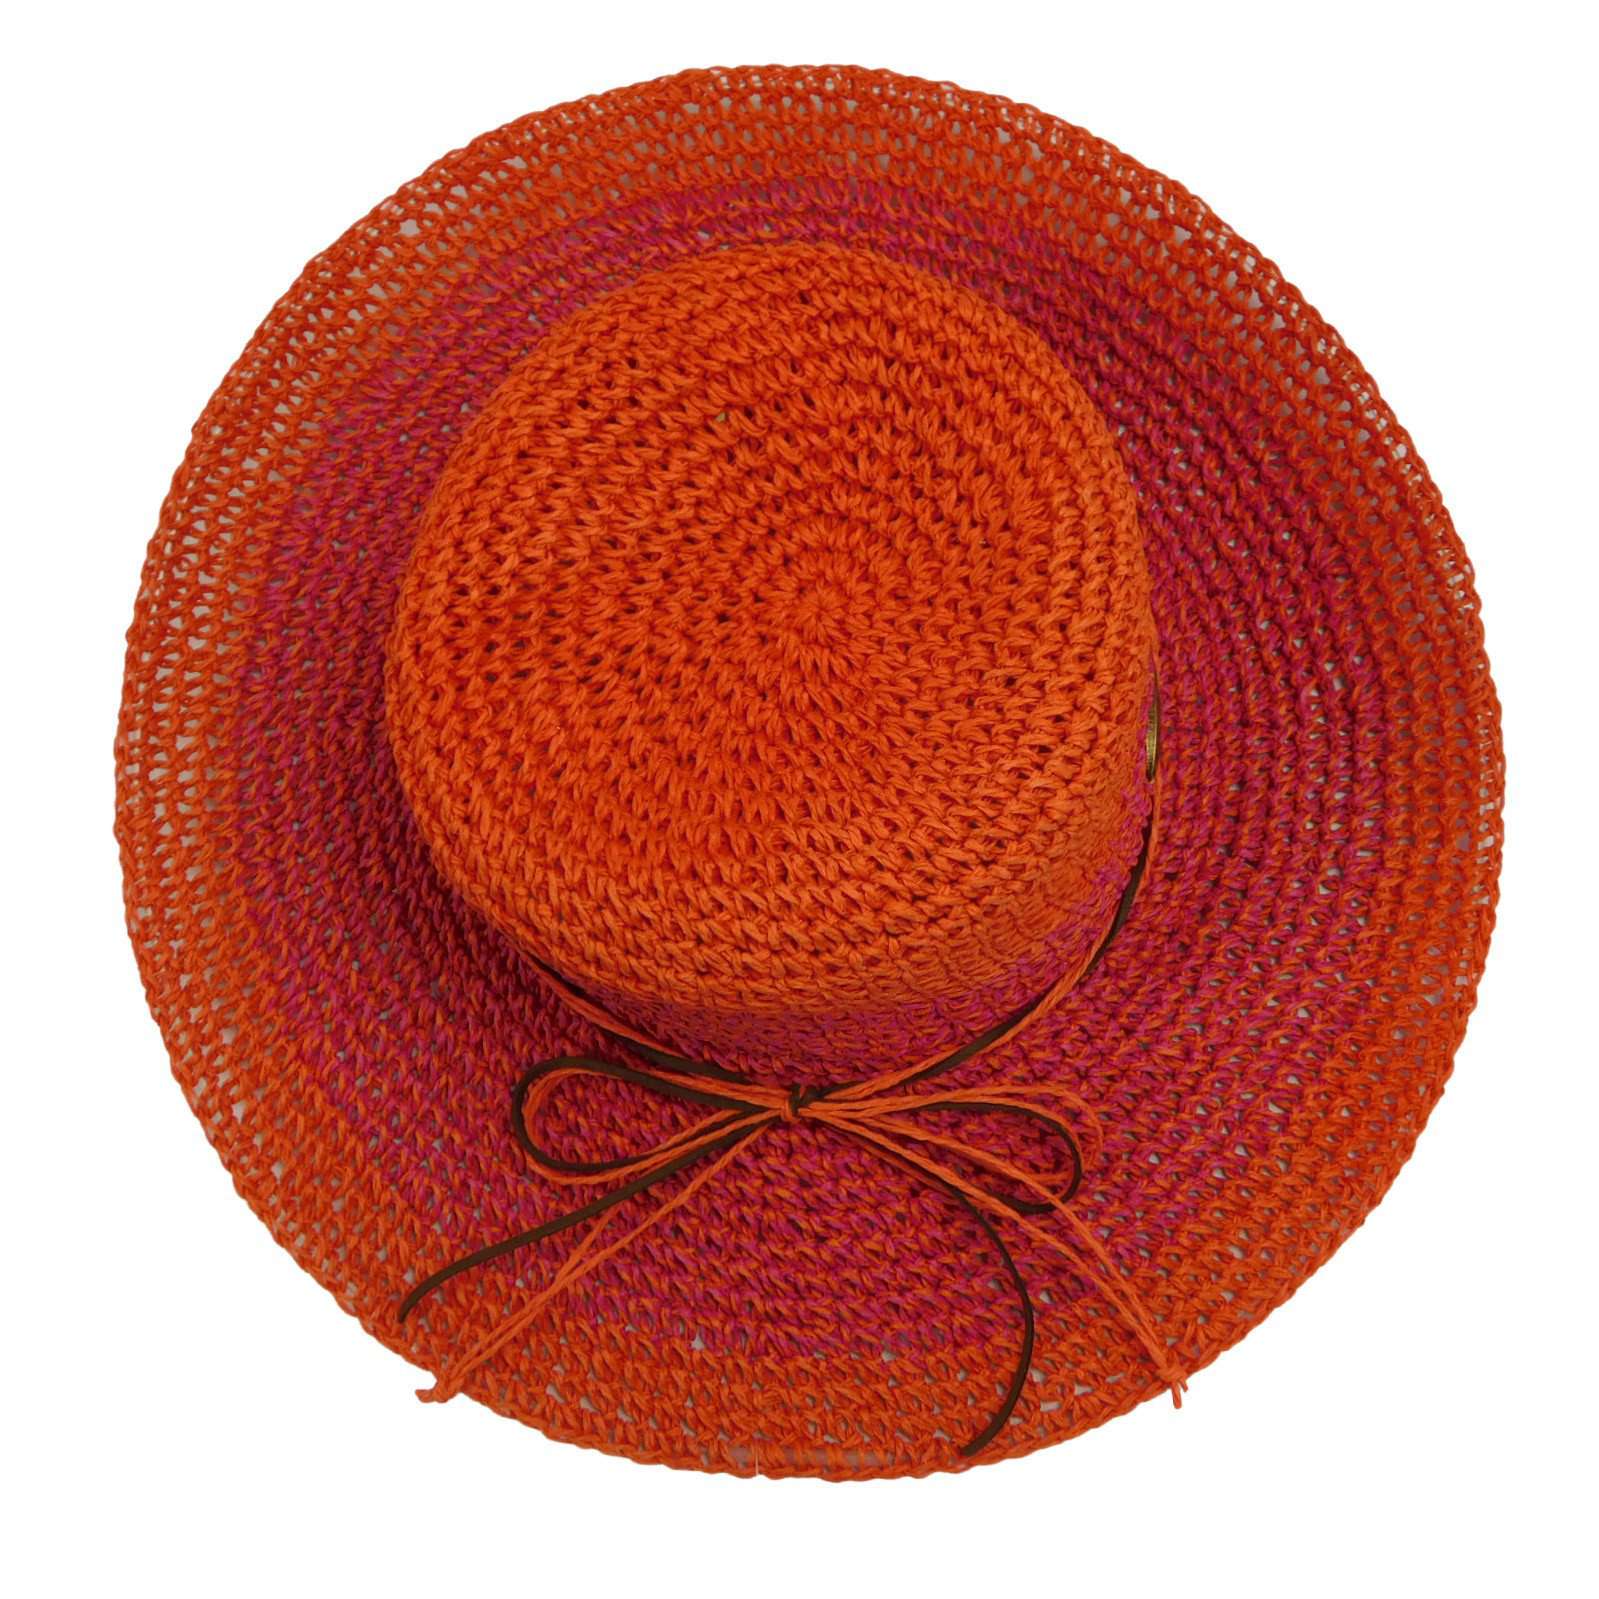 Hand Crocheted Twisted Toyo Floppy Hat - Cappelli Straworld Floppy Hat Cappelli Straworld WSTS499OR Orange Medium (57 cm) 